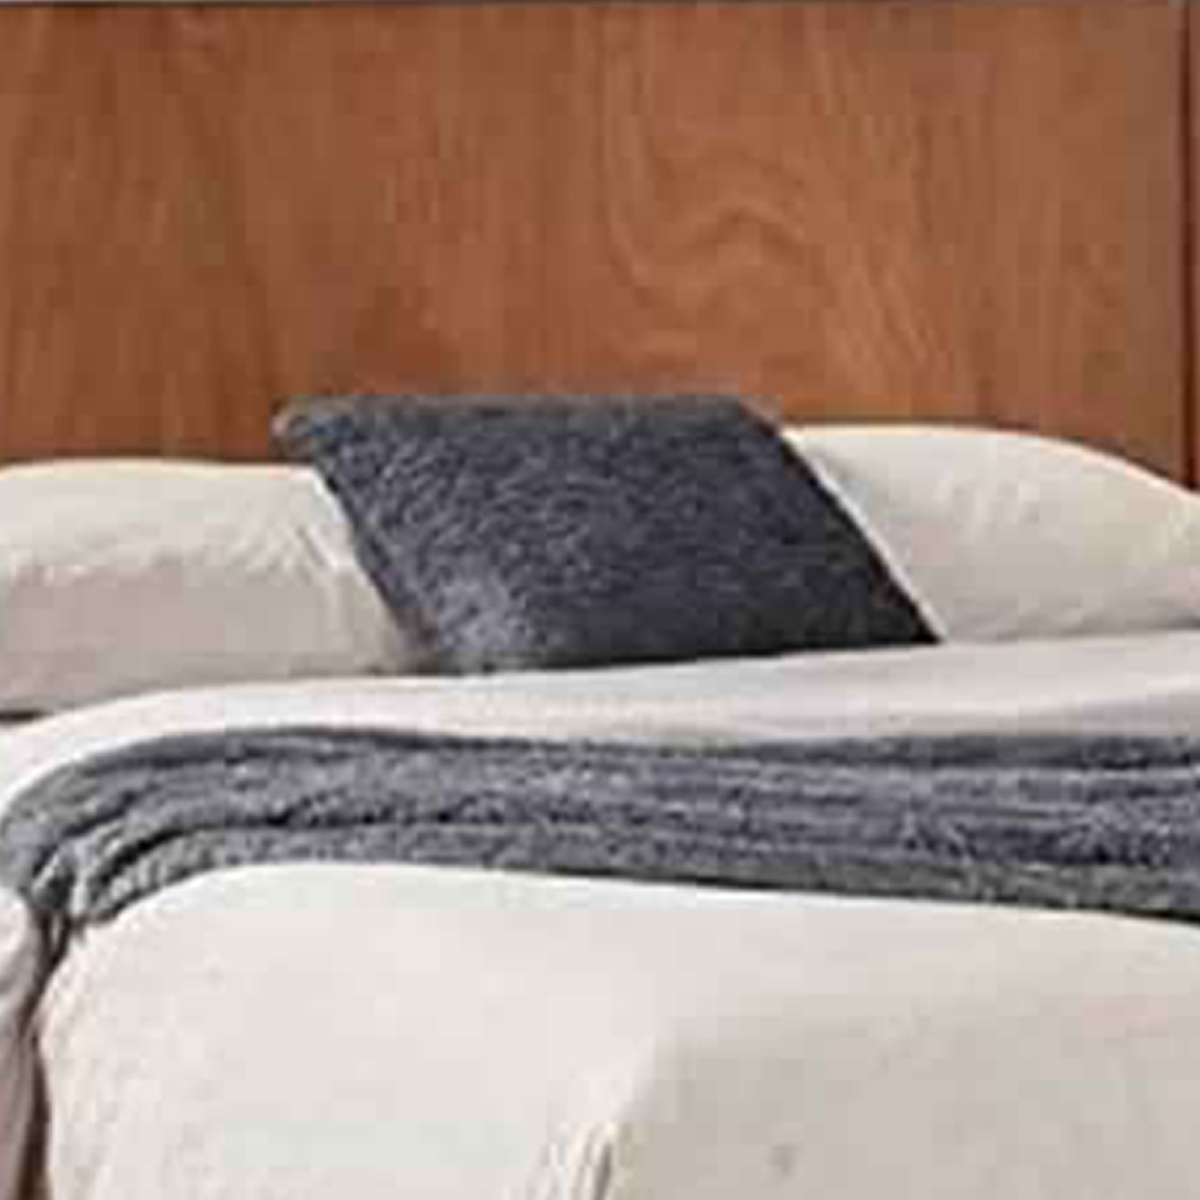 Full Platform Bed With Angled Block Legs And Grain Details, Brown- Saltoro Sherpi